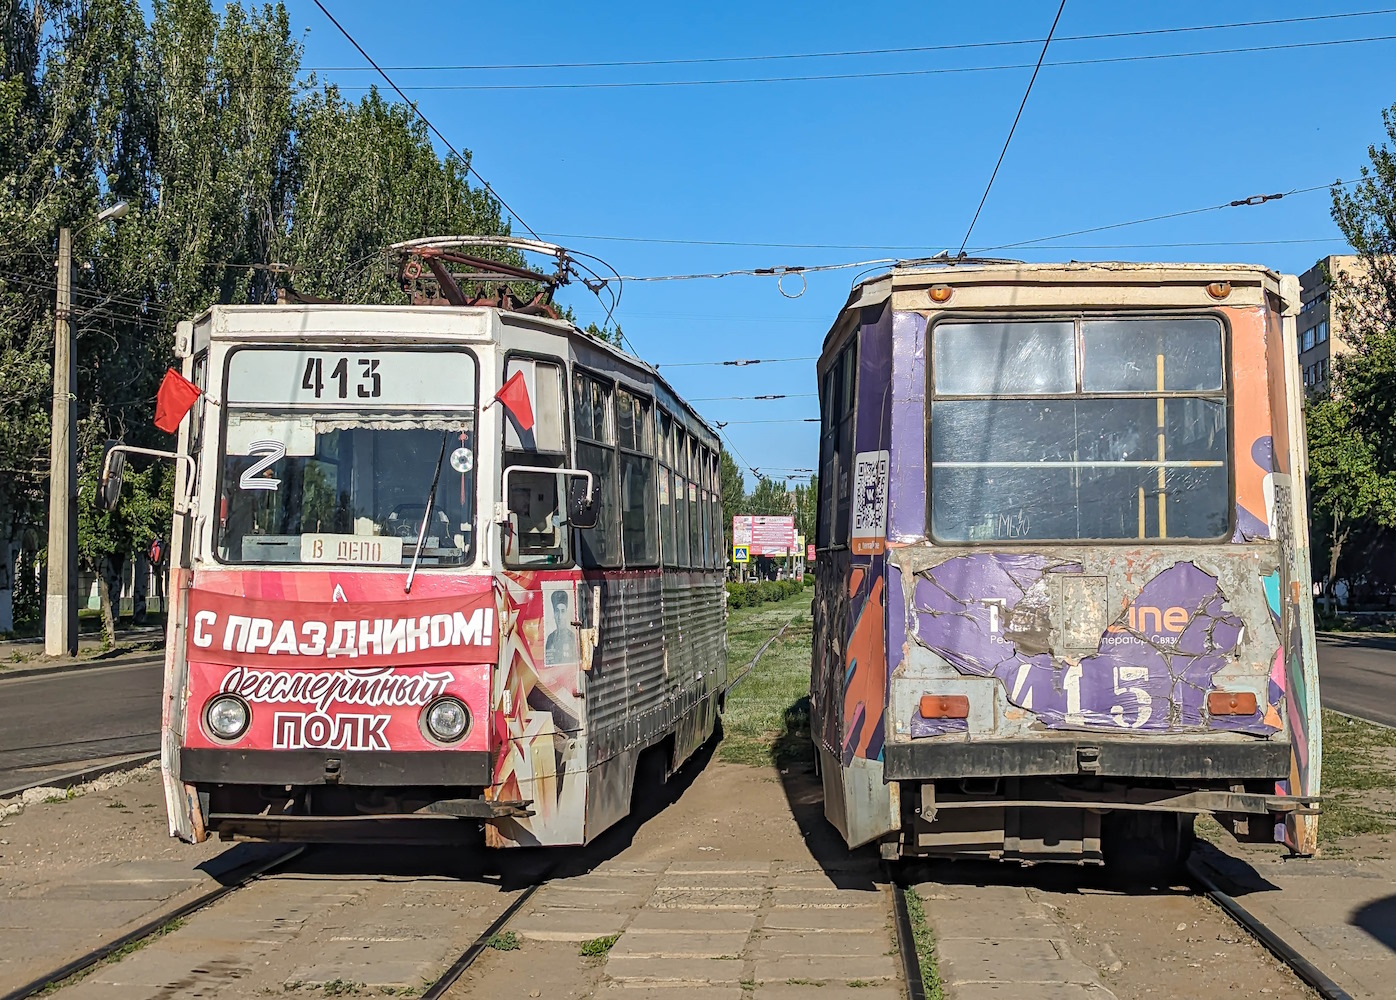 Horlivka, 71-605 (KTM-5M3) # 413; Horlivka, 71-605 (KTM-5M3) # 415